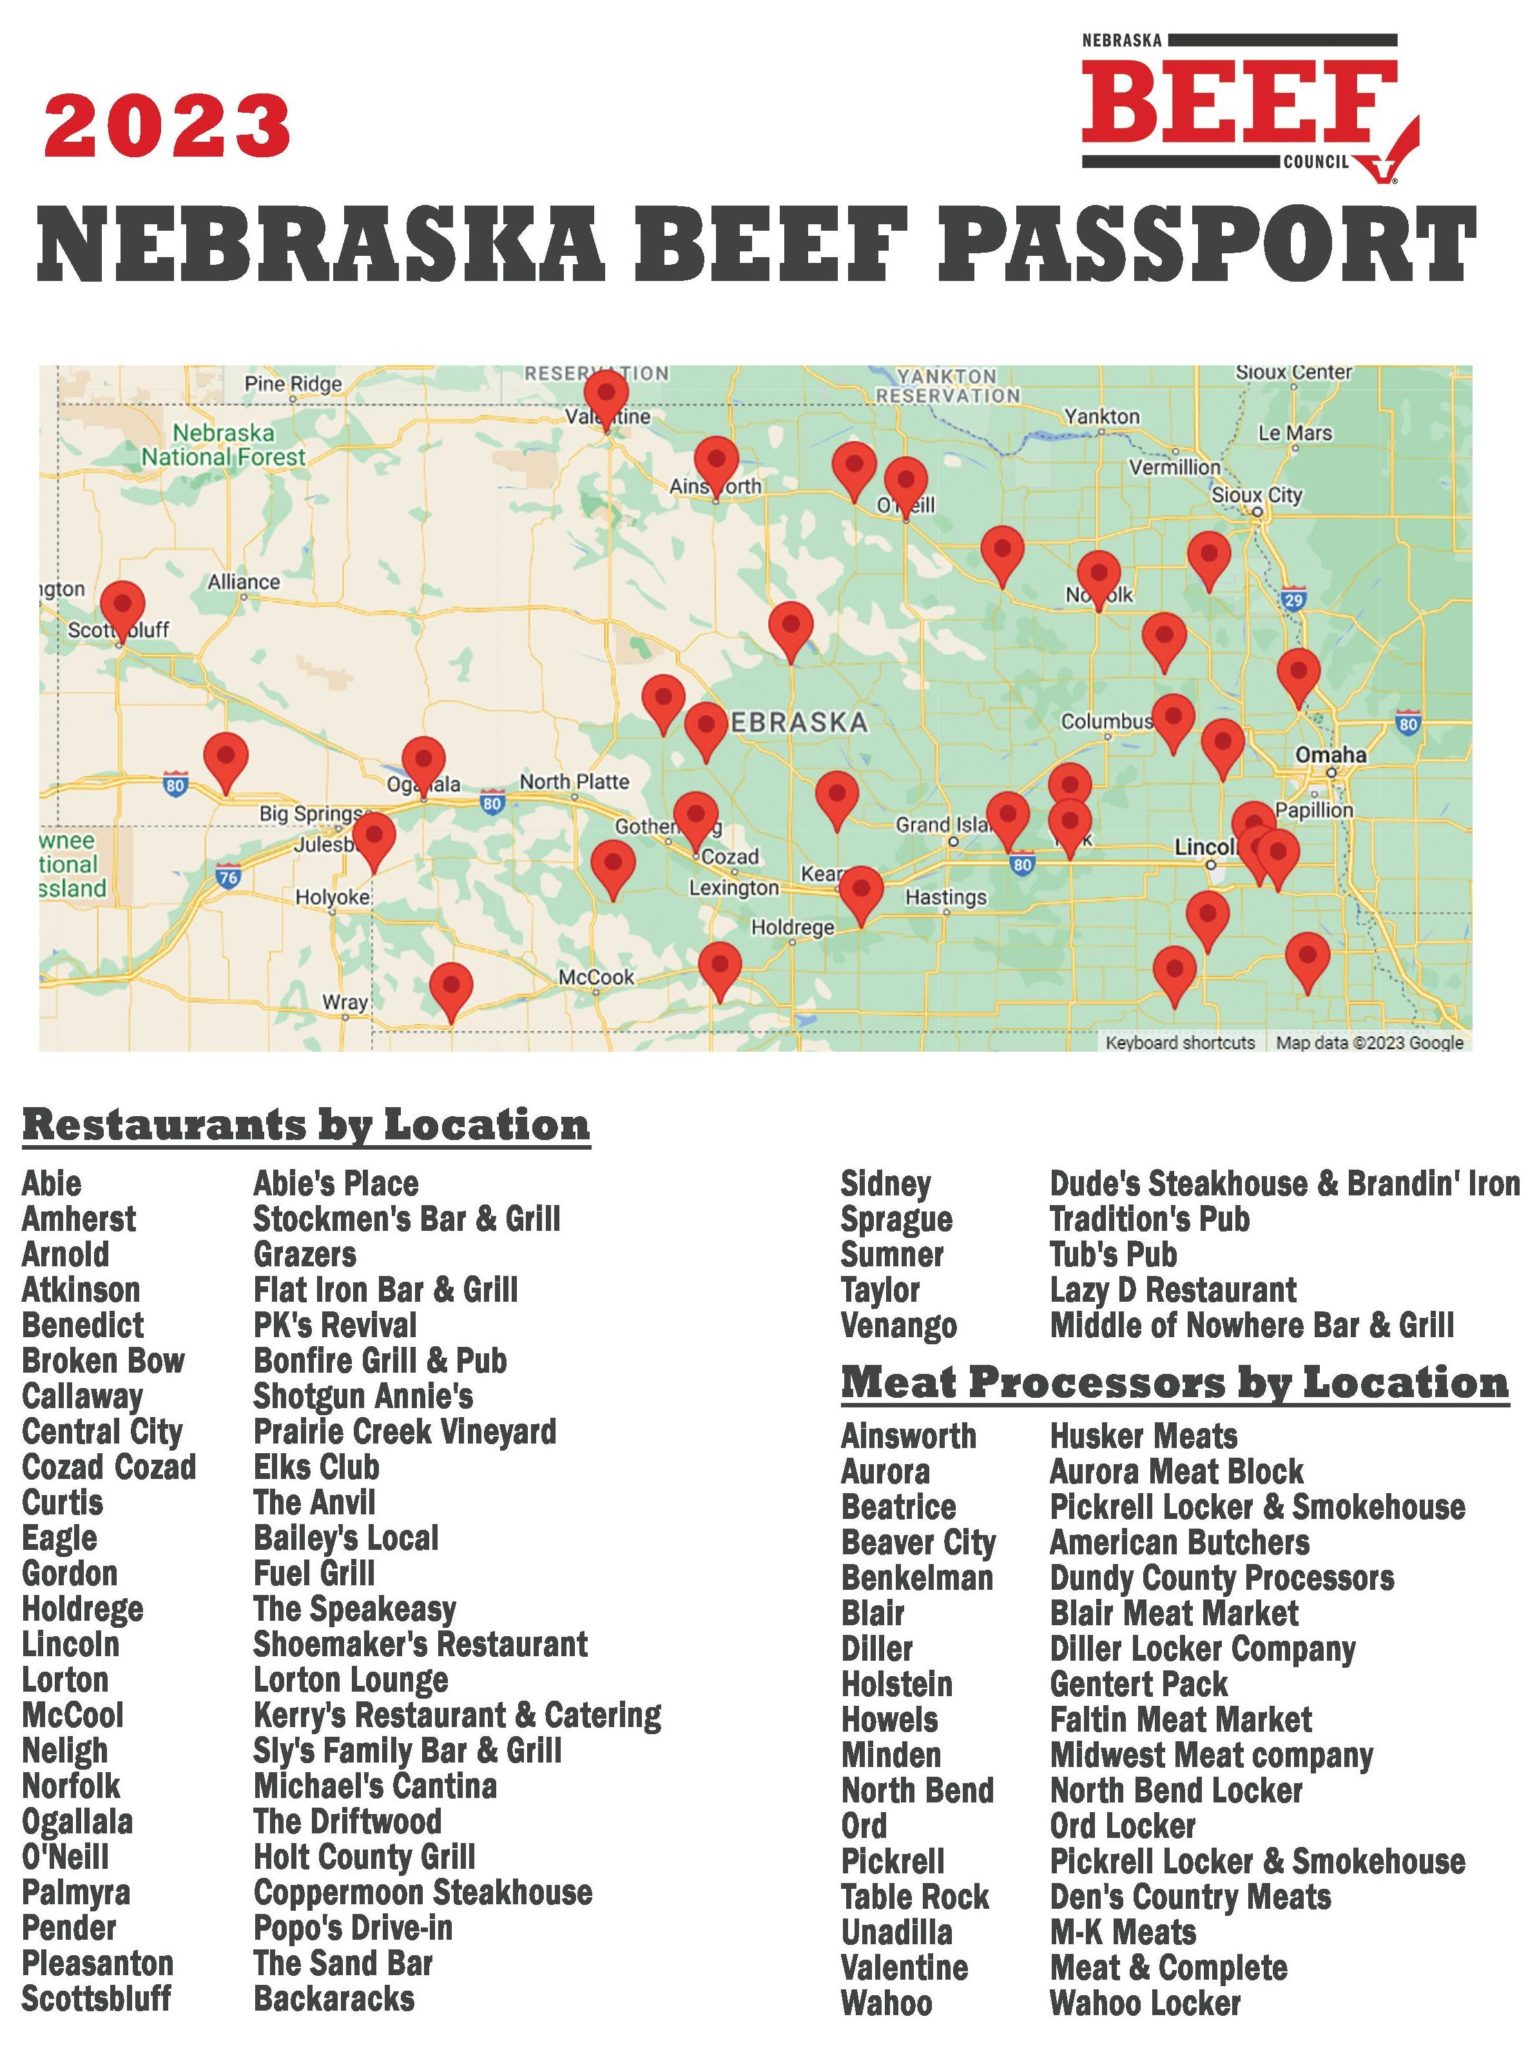 2023 Nebraska Beef Passport Highlights Independent Restaurants and Meat